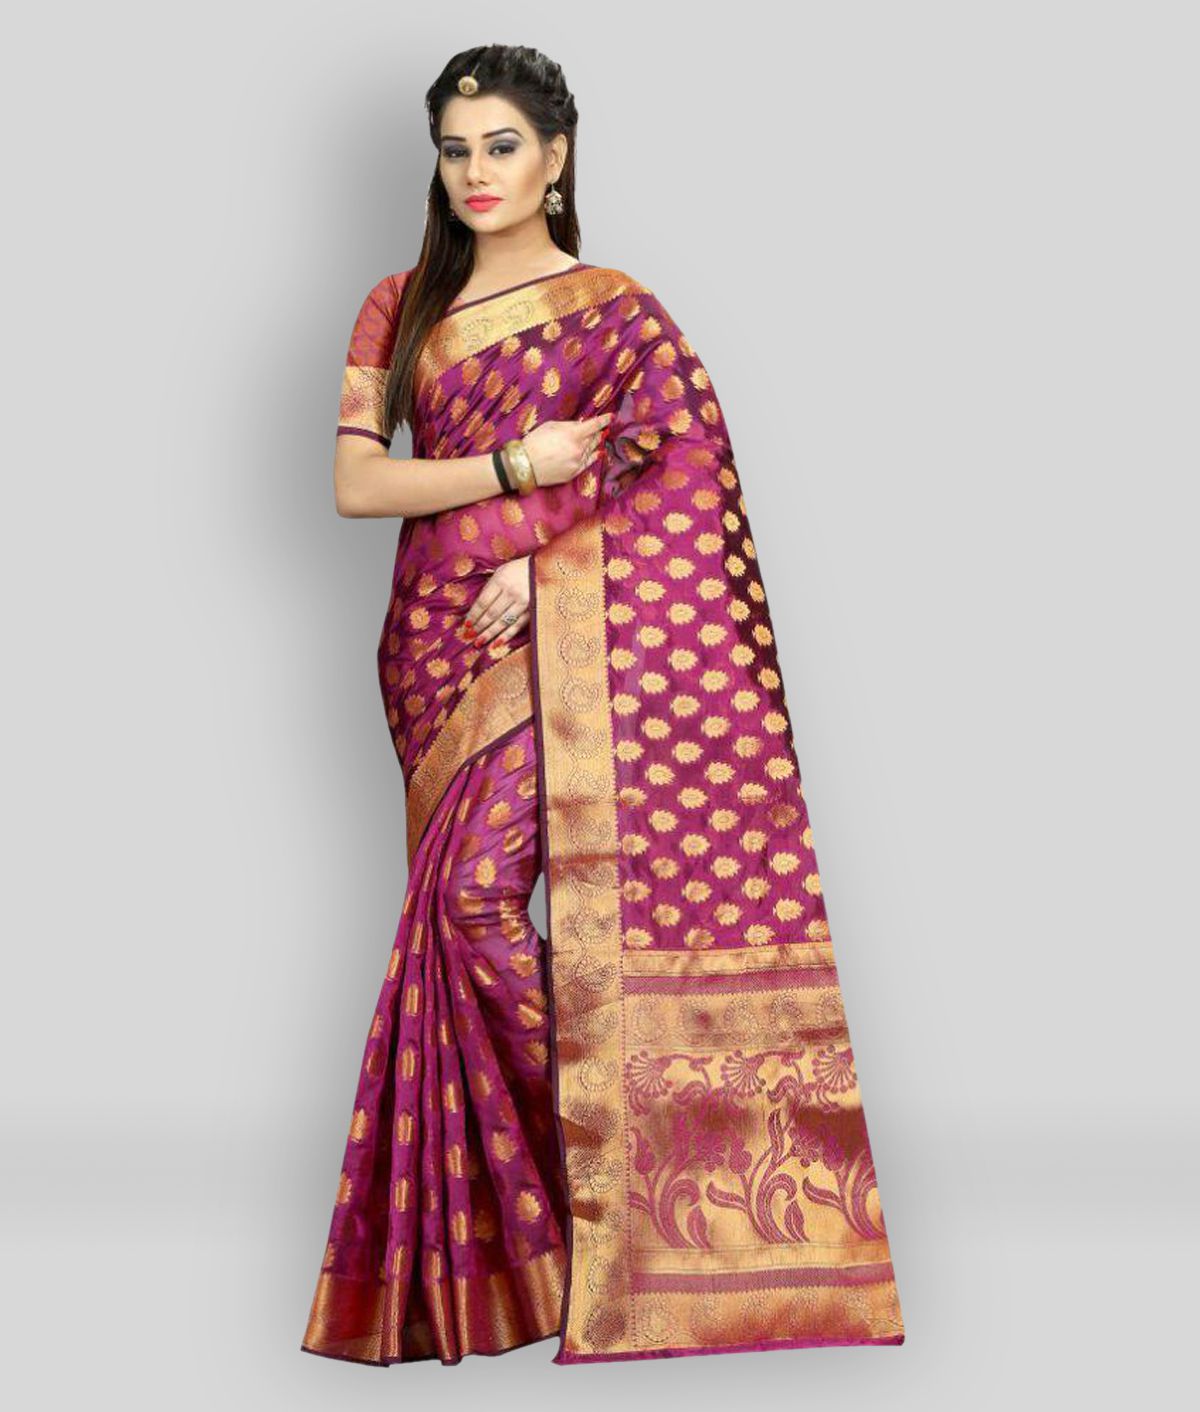     			Gazal Fashions - Pink Banarasi Silk Saree With Blouse Piece (Pack of 1)